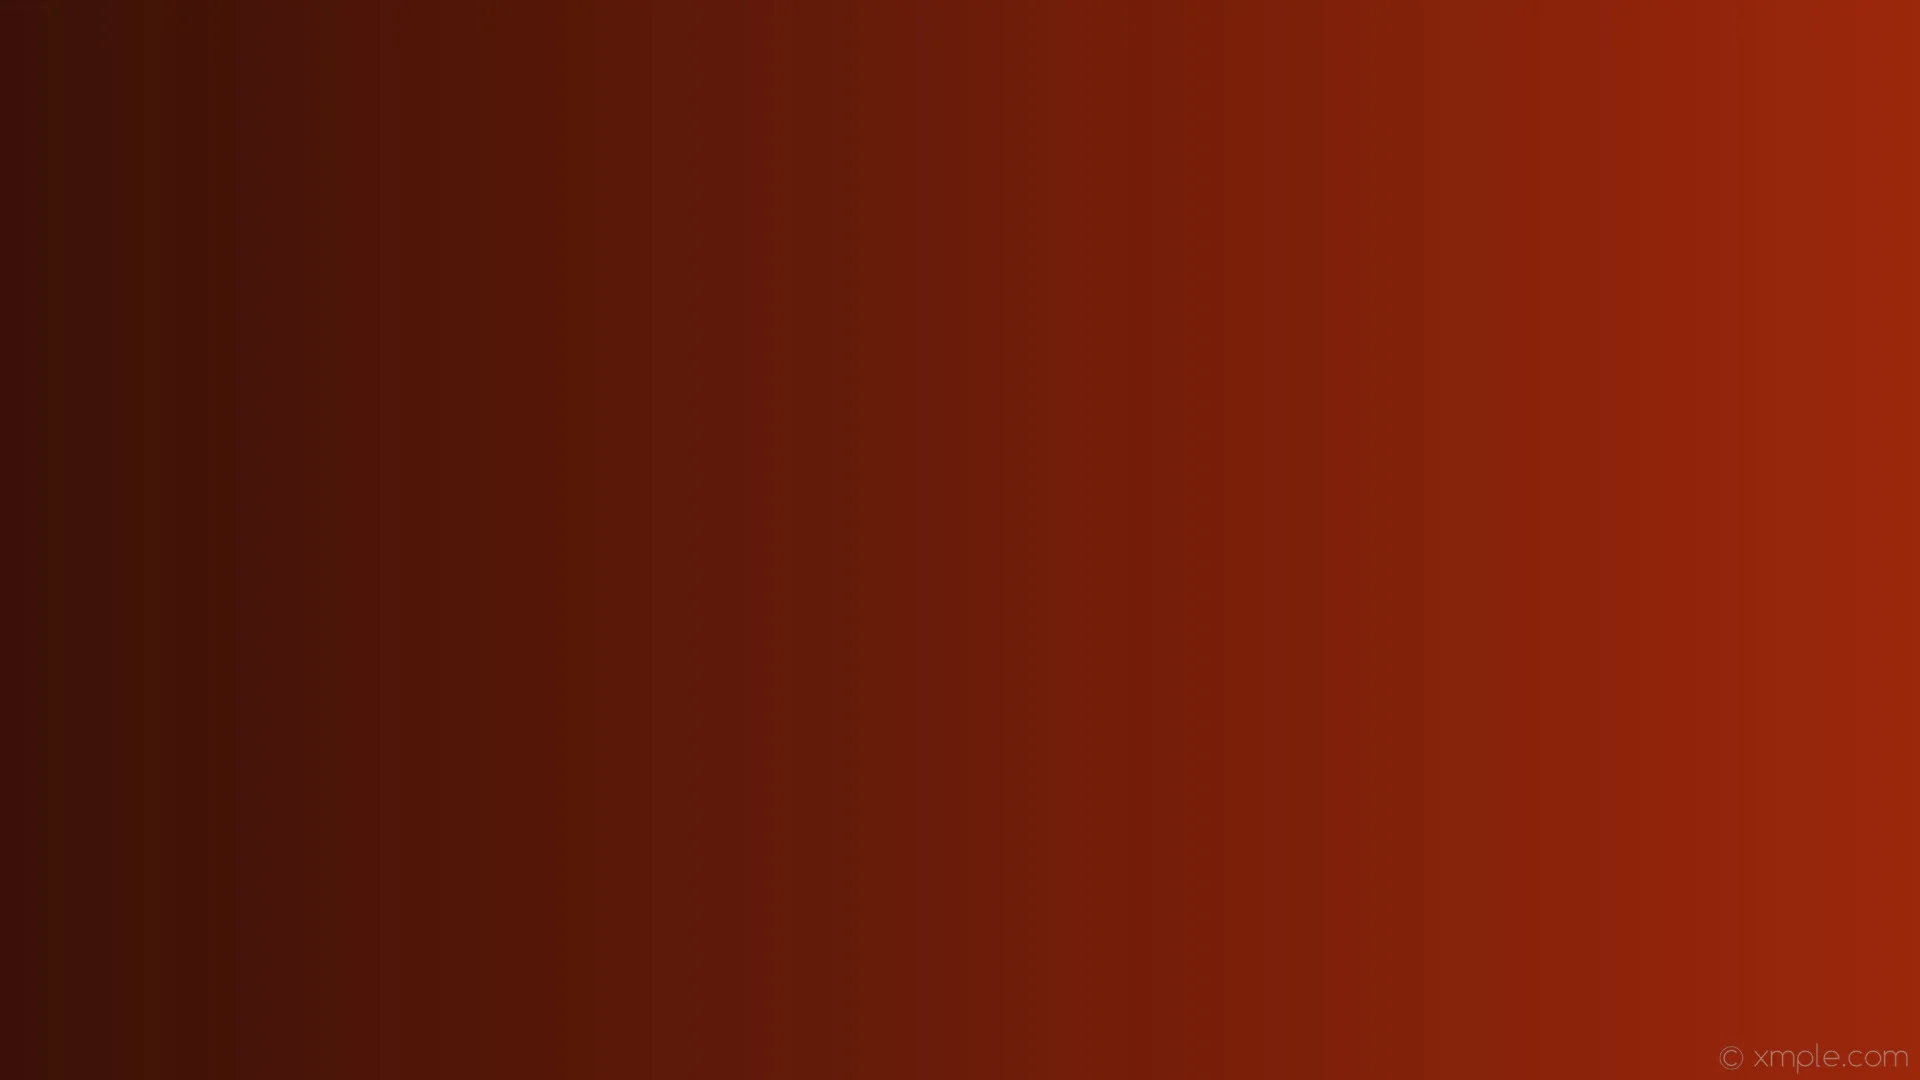 wallpaper red gradient linear dark red #9c270b #3a1107 0Â°